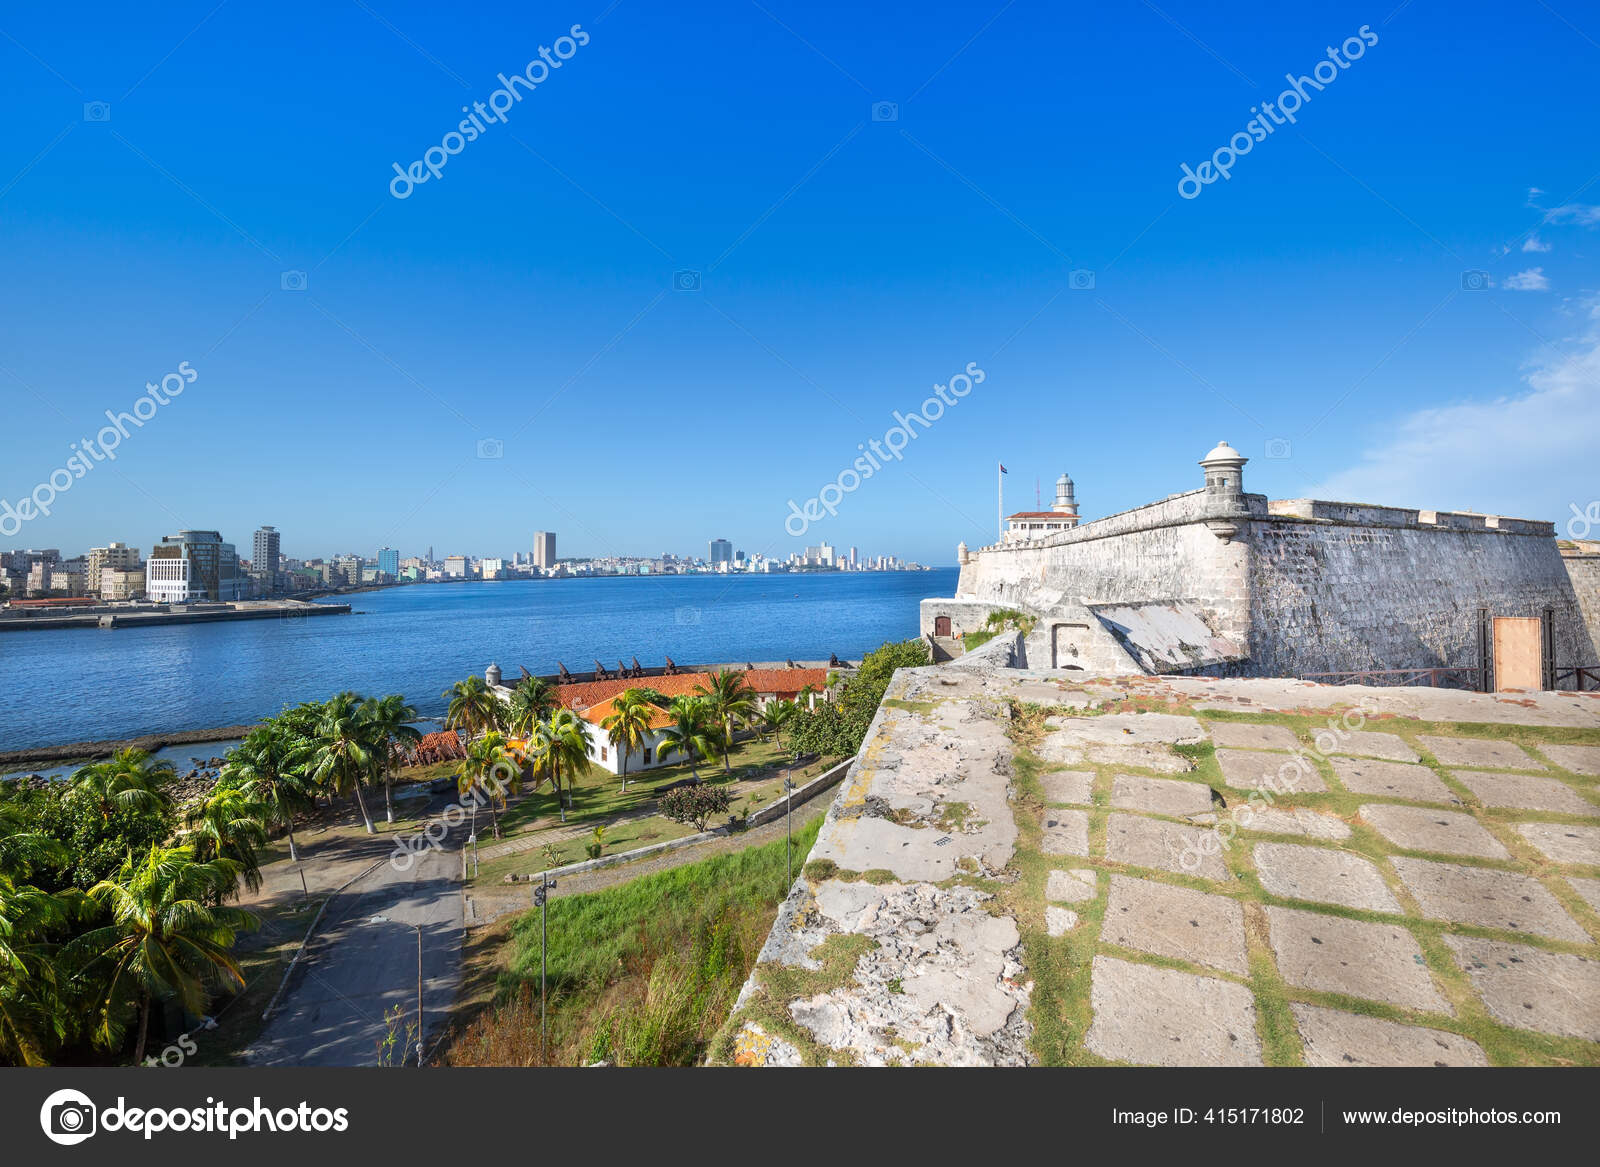 El morro castle havana harbor hi-res stock photography and images